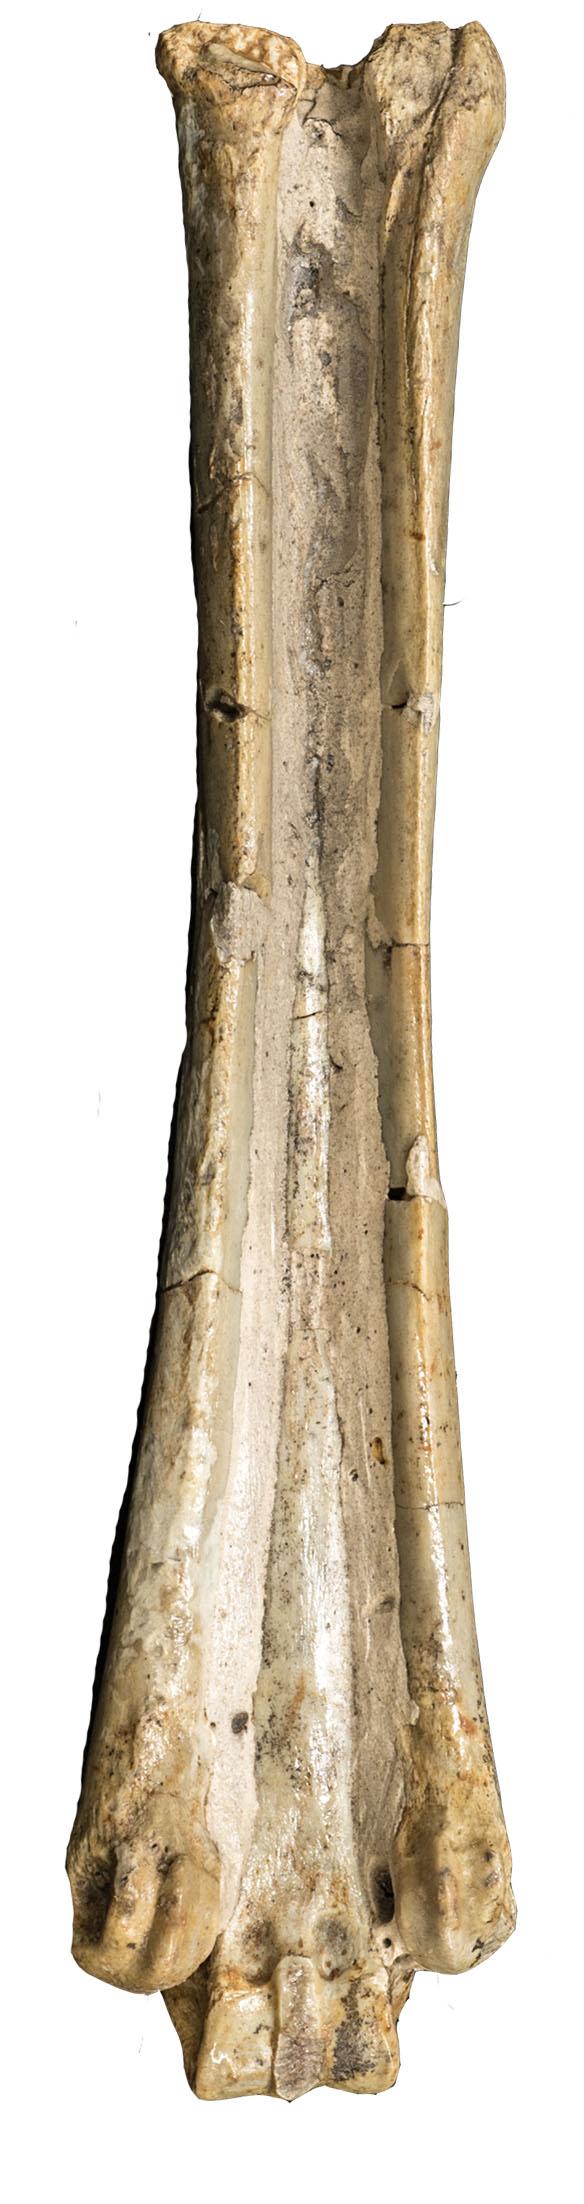 Figure B Back view of 40 million-year-old Mesohippus' Metacarpal